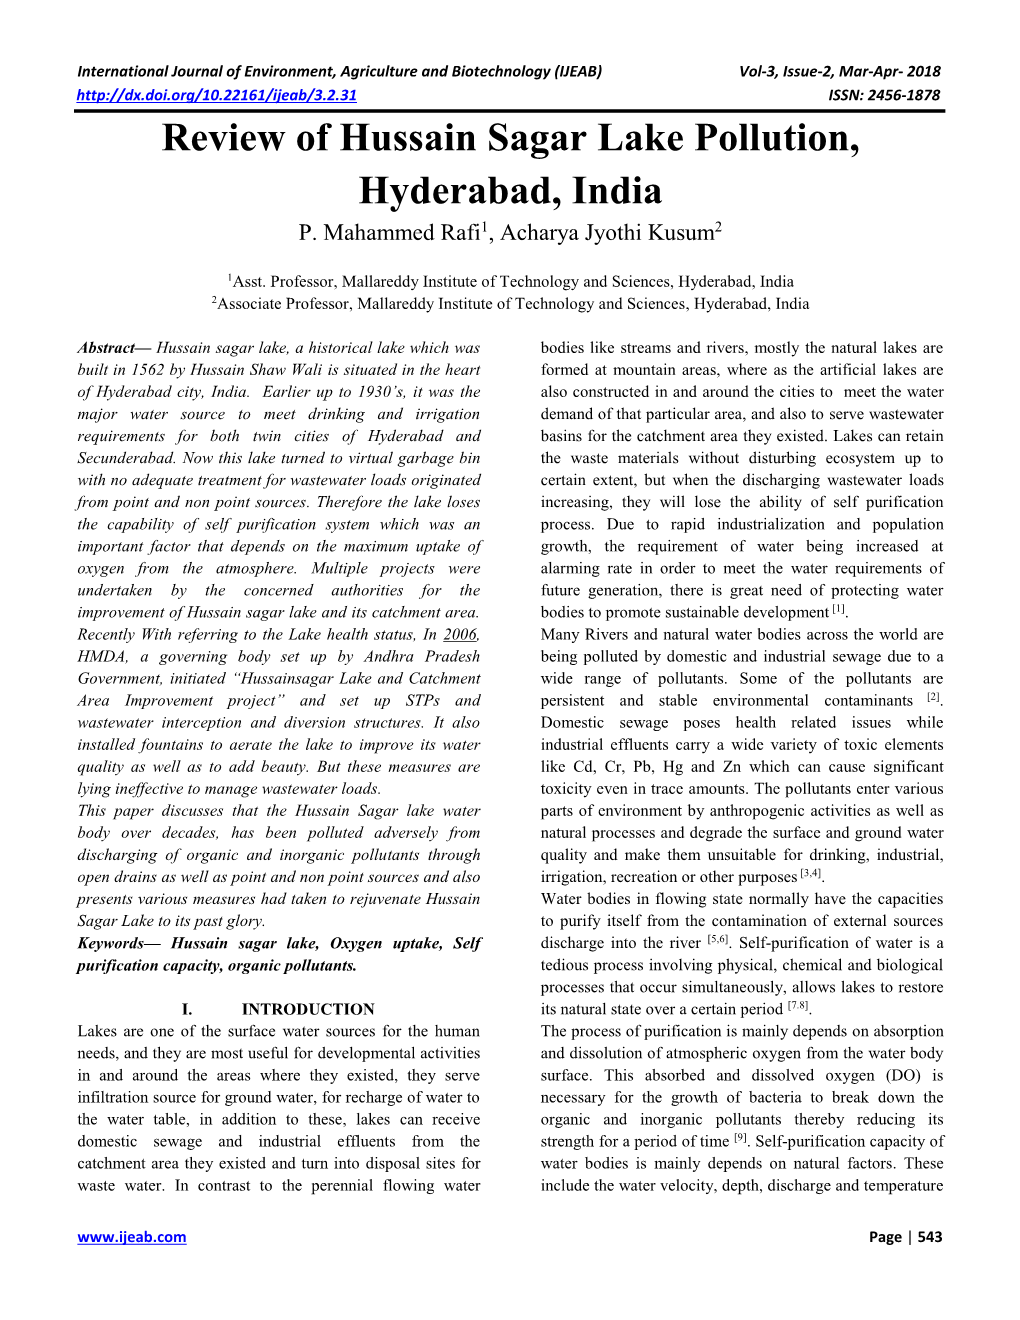 Review of Hussain Sagar Lake Pollution, Hyderabad, India P